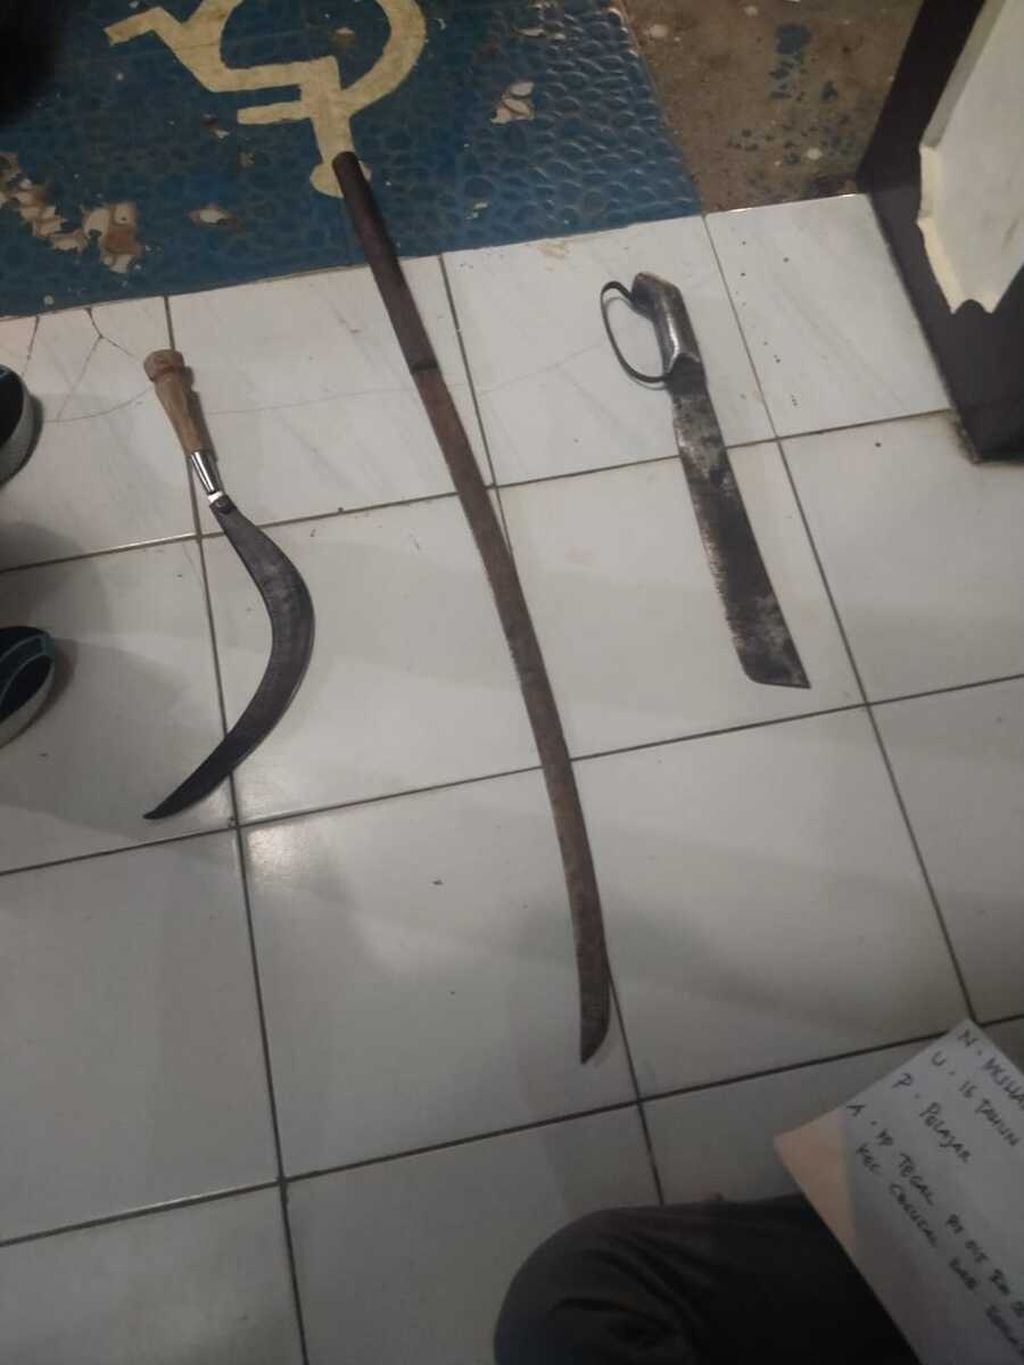 Barang bukti senjata tajam yang digunakan pelaku kejahatan jalanan di Banten yang meresahkan akhir-akhir ini.